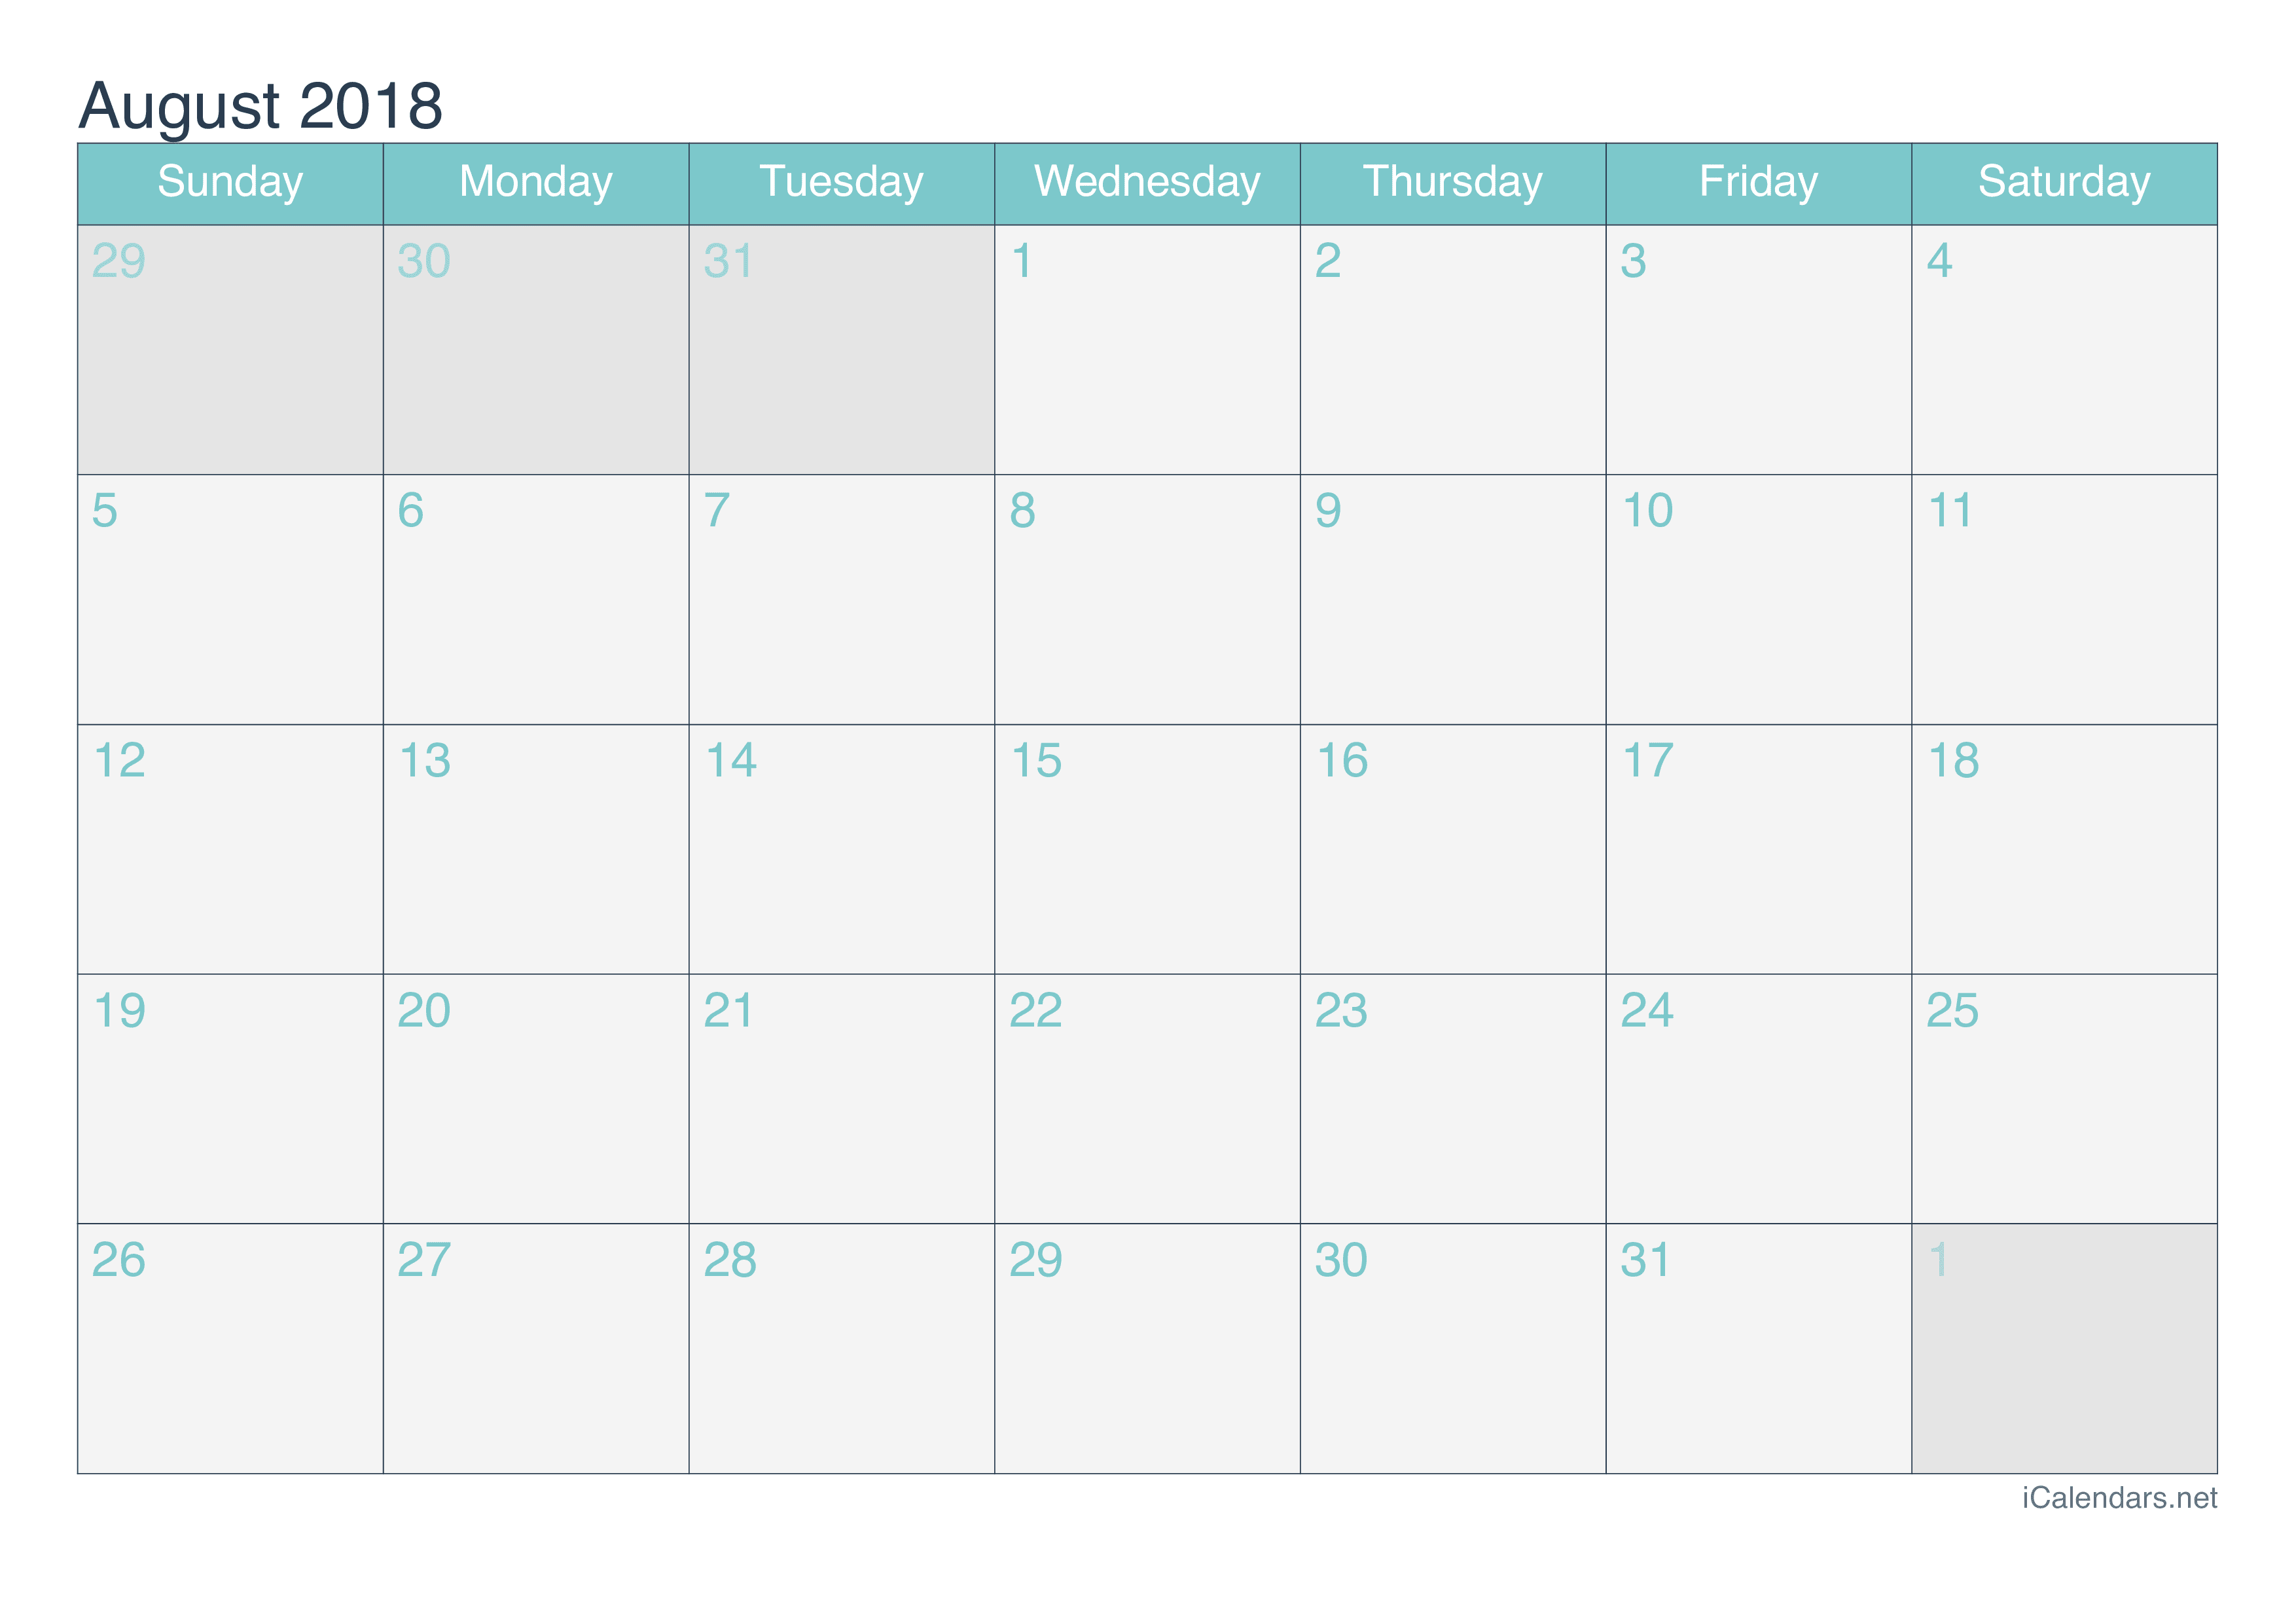 august-2018-calendar-with-holidays-india-calendar-calendar